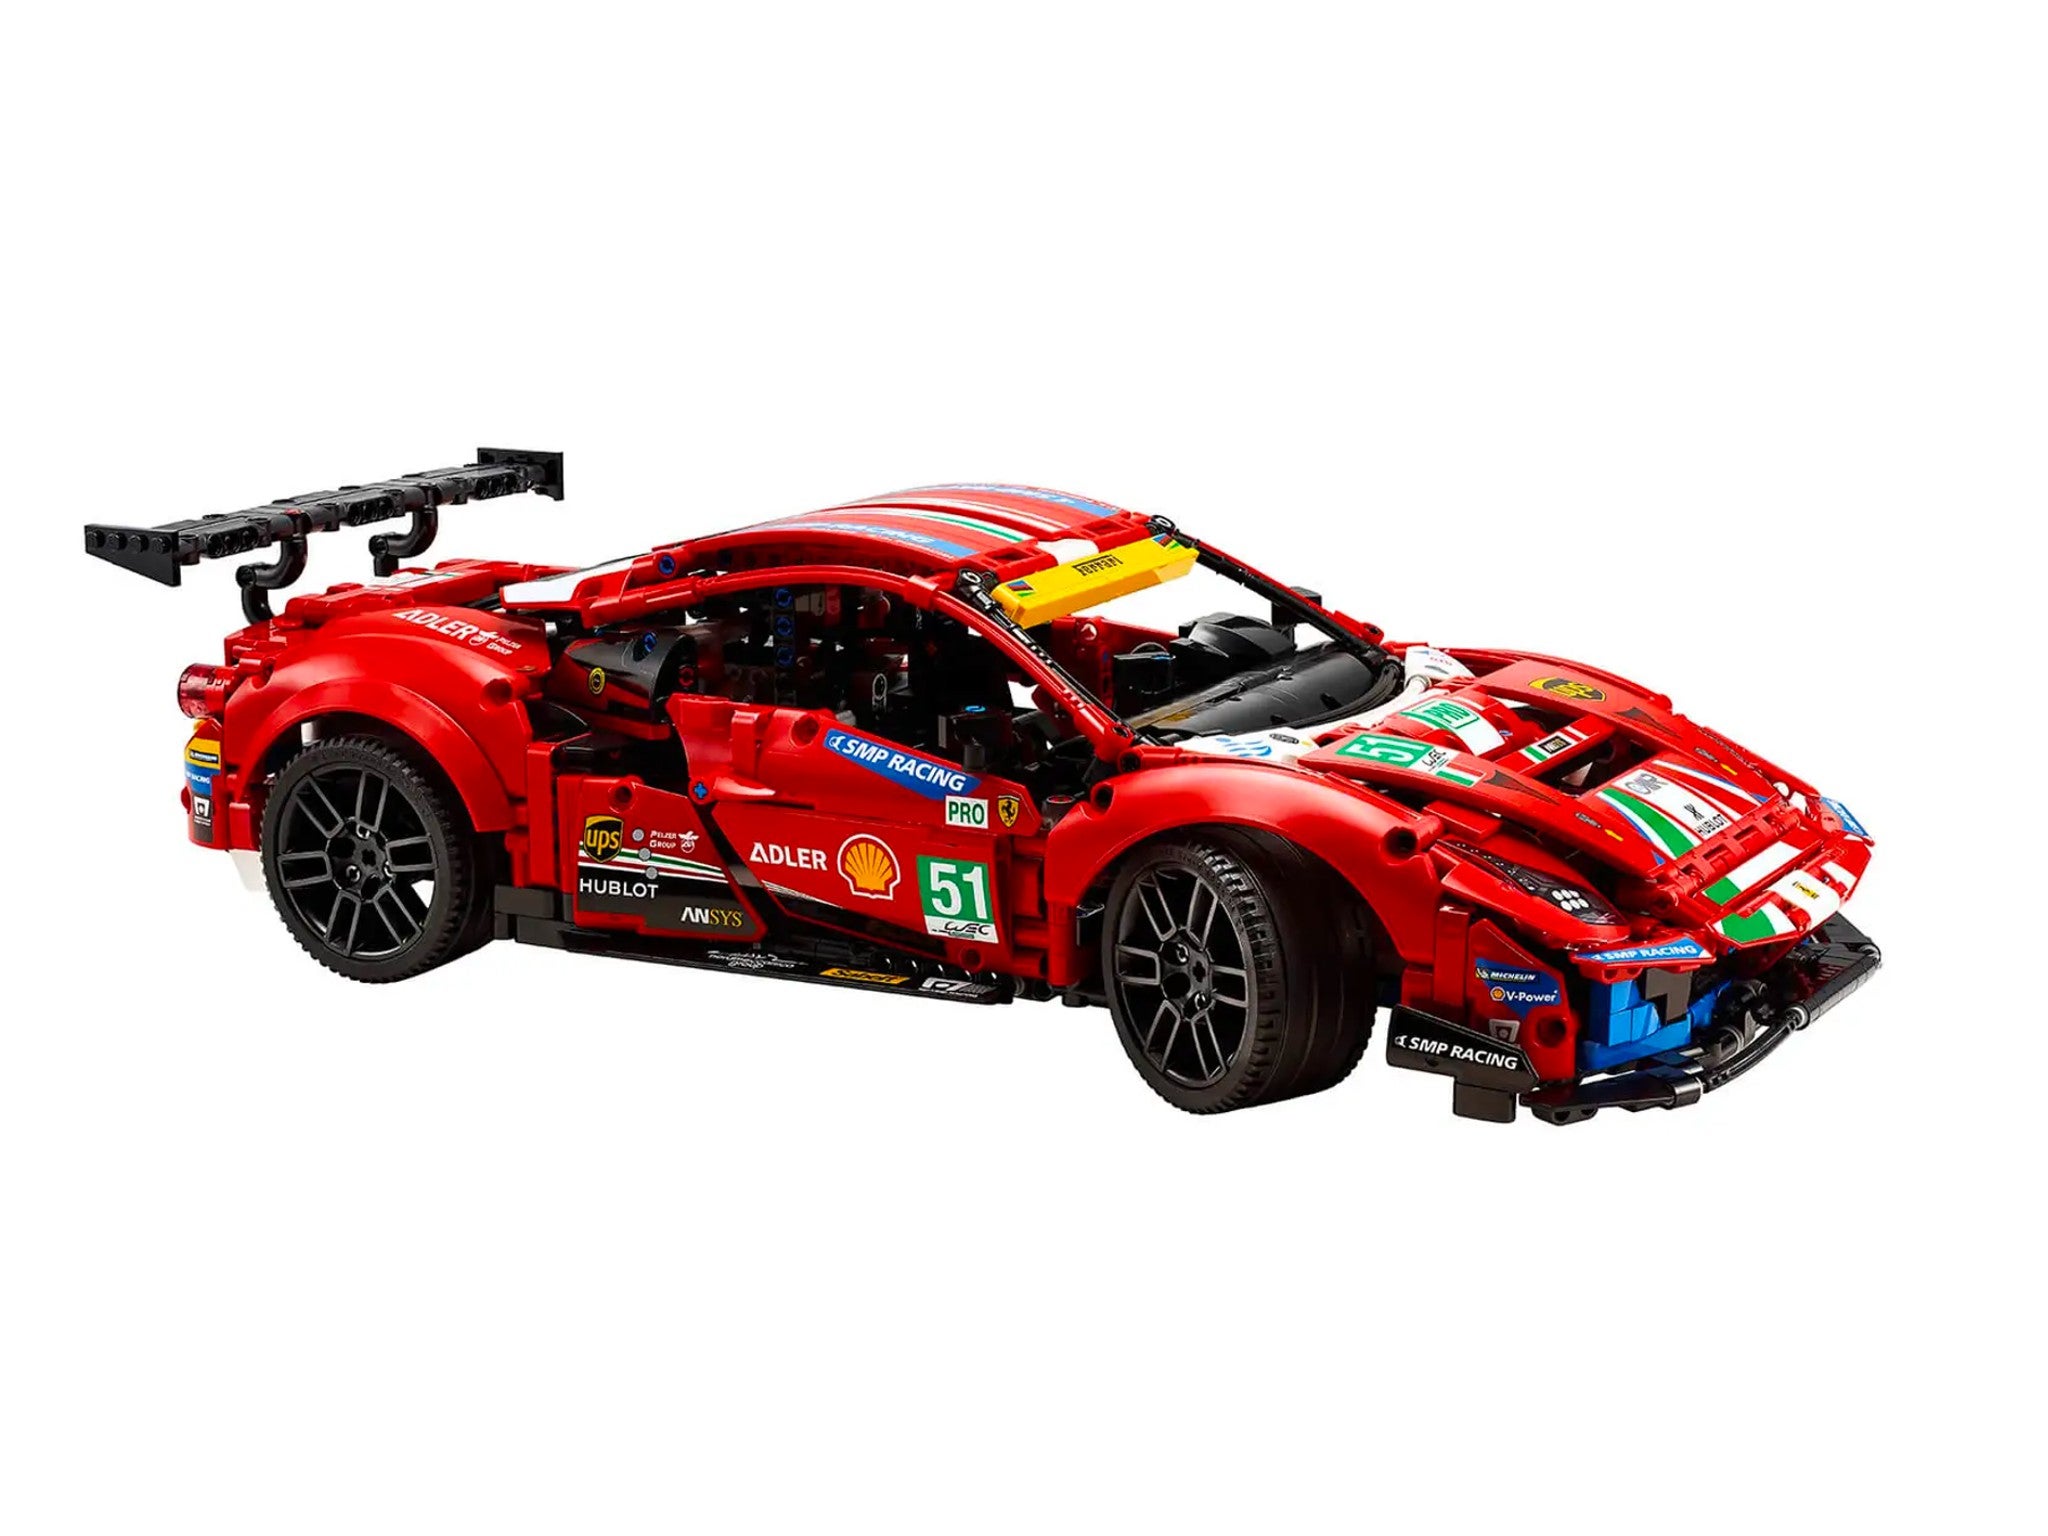 Lego technic Ferrari 488 GTE AF Corse #51 indybest.jpg